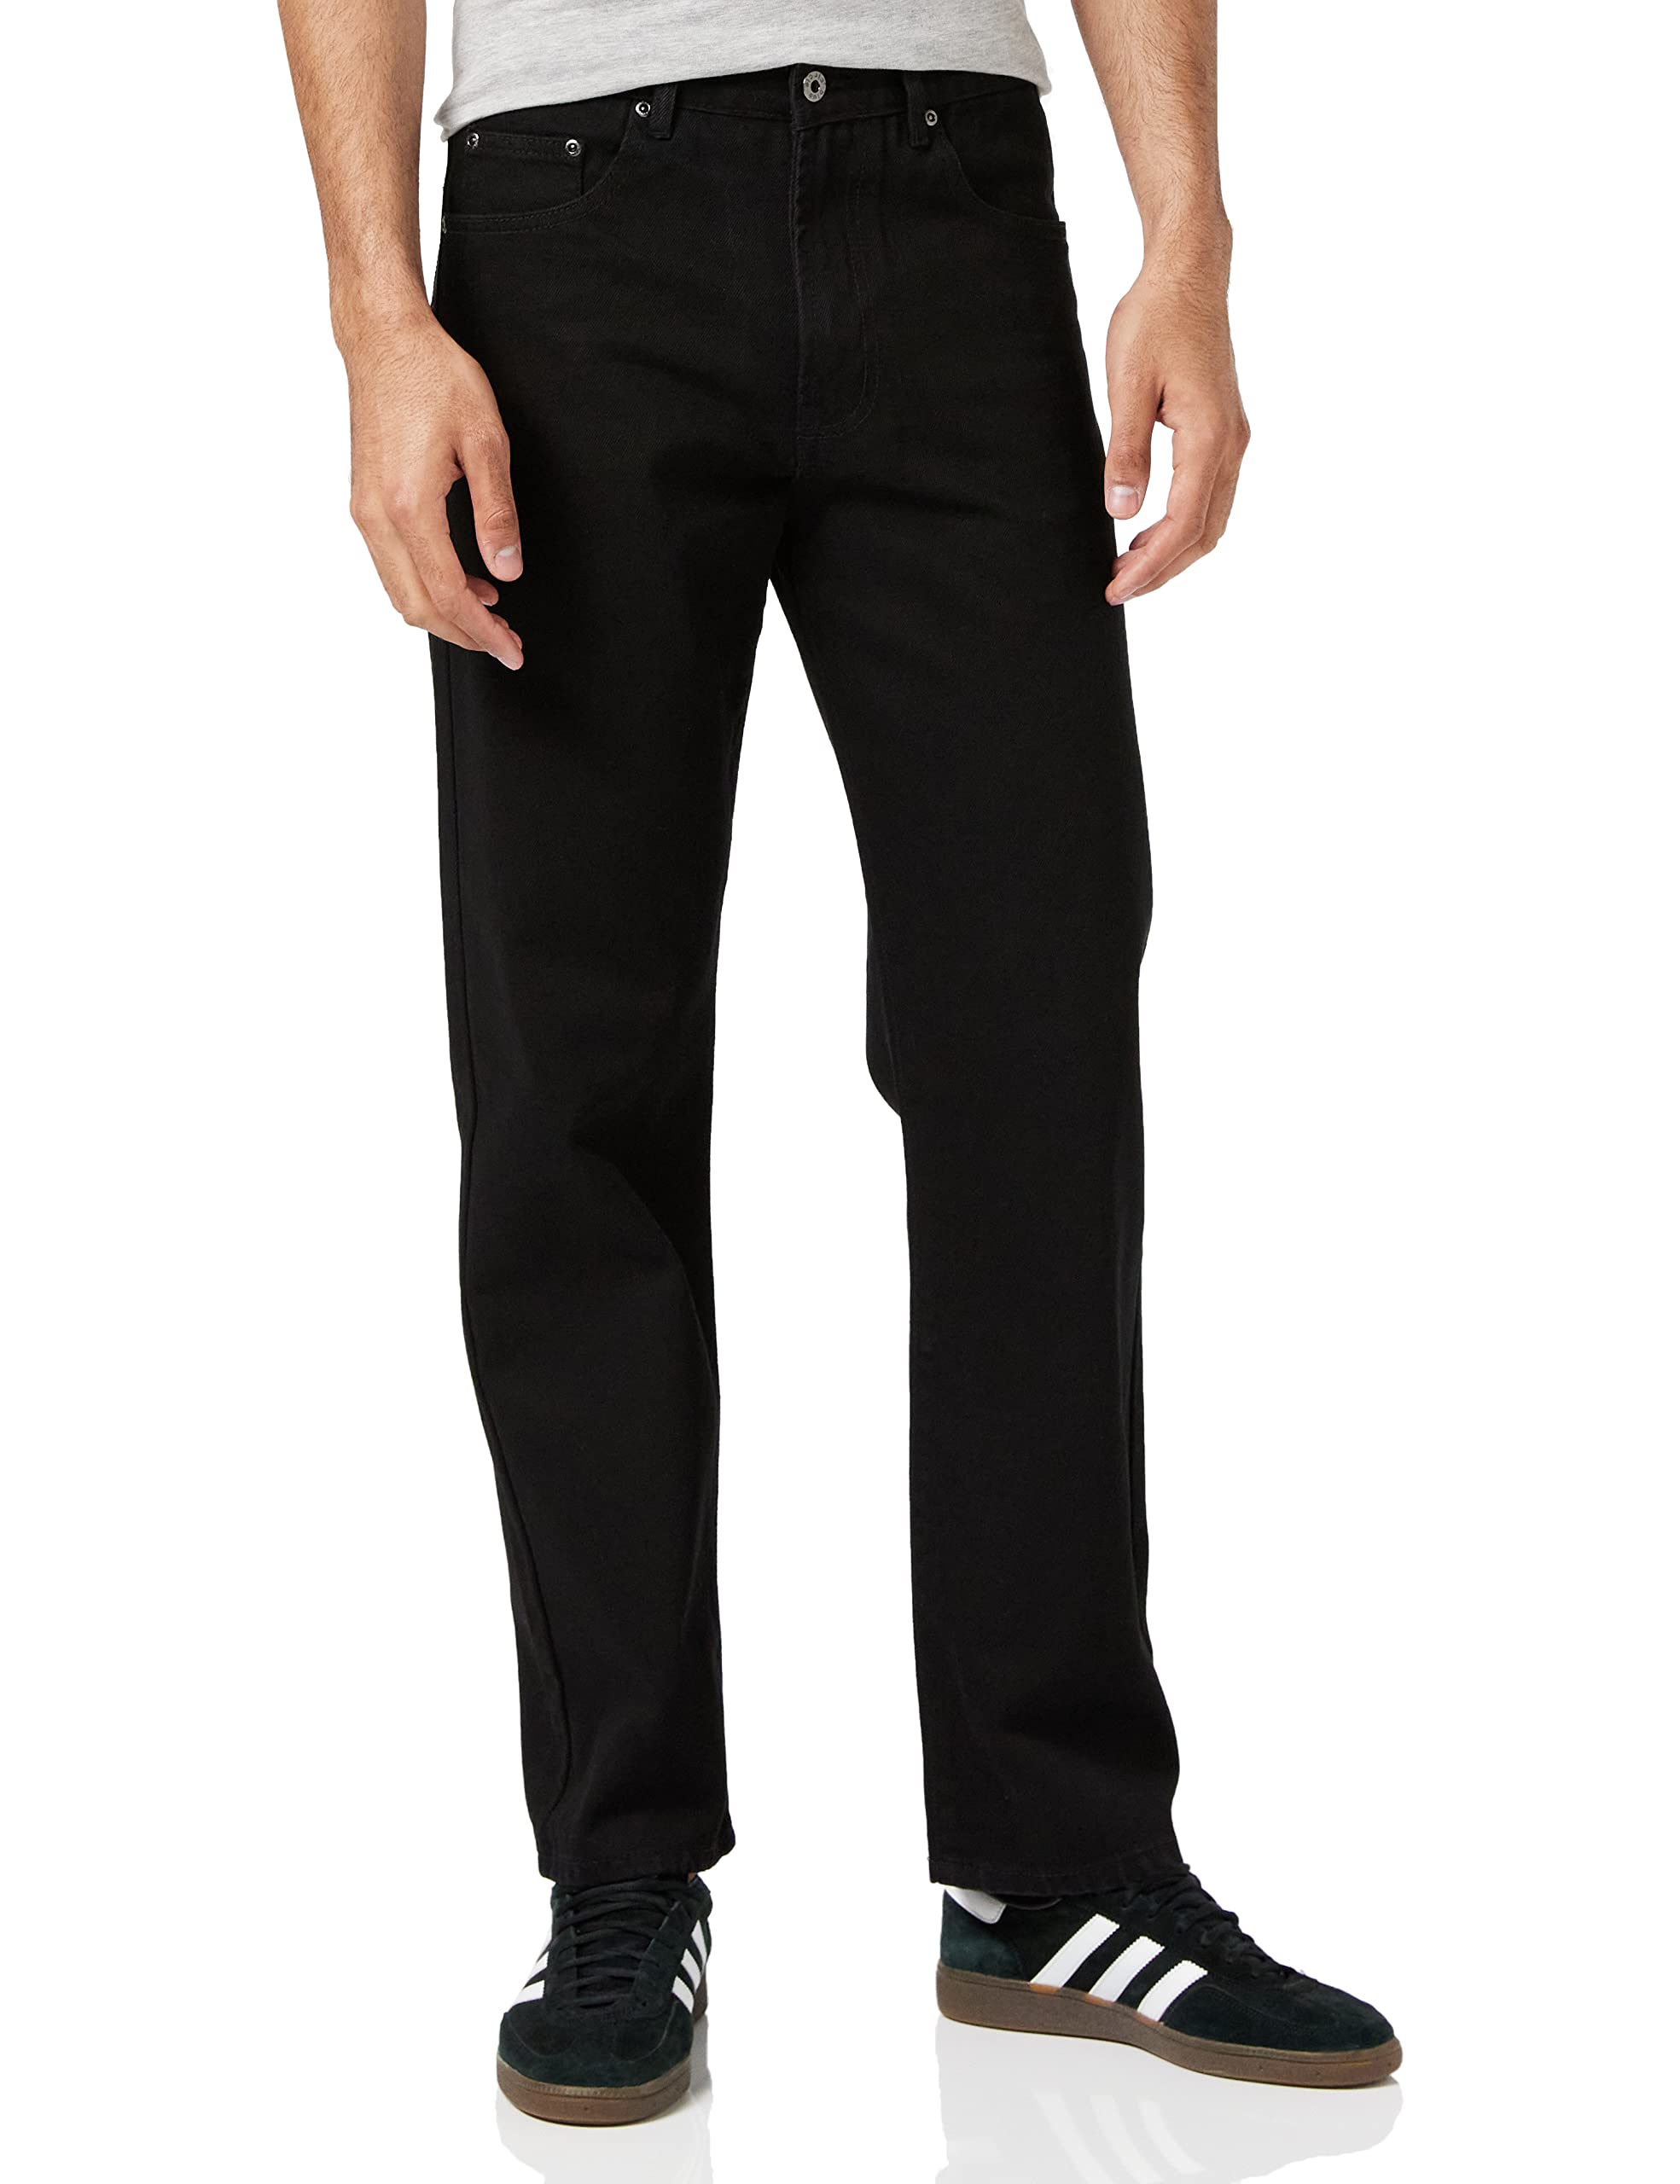 Enzo Herren Straight Jeans BCB5, Schwarz (Black), 40S